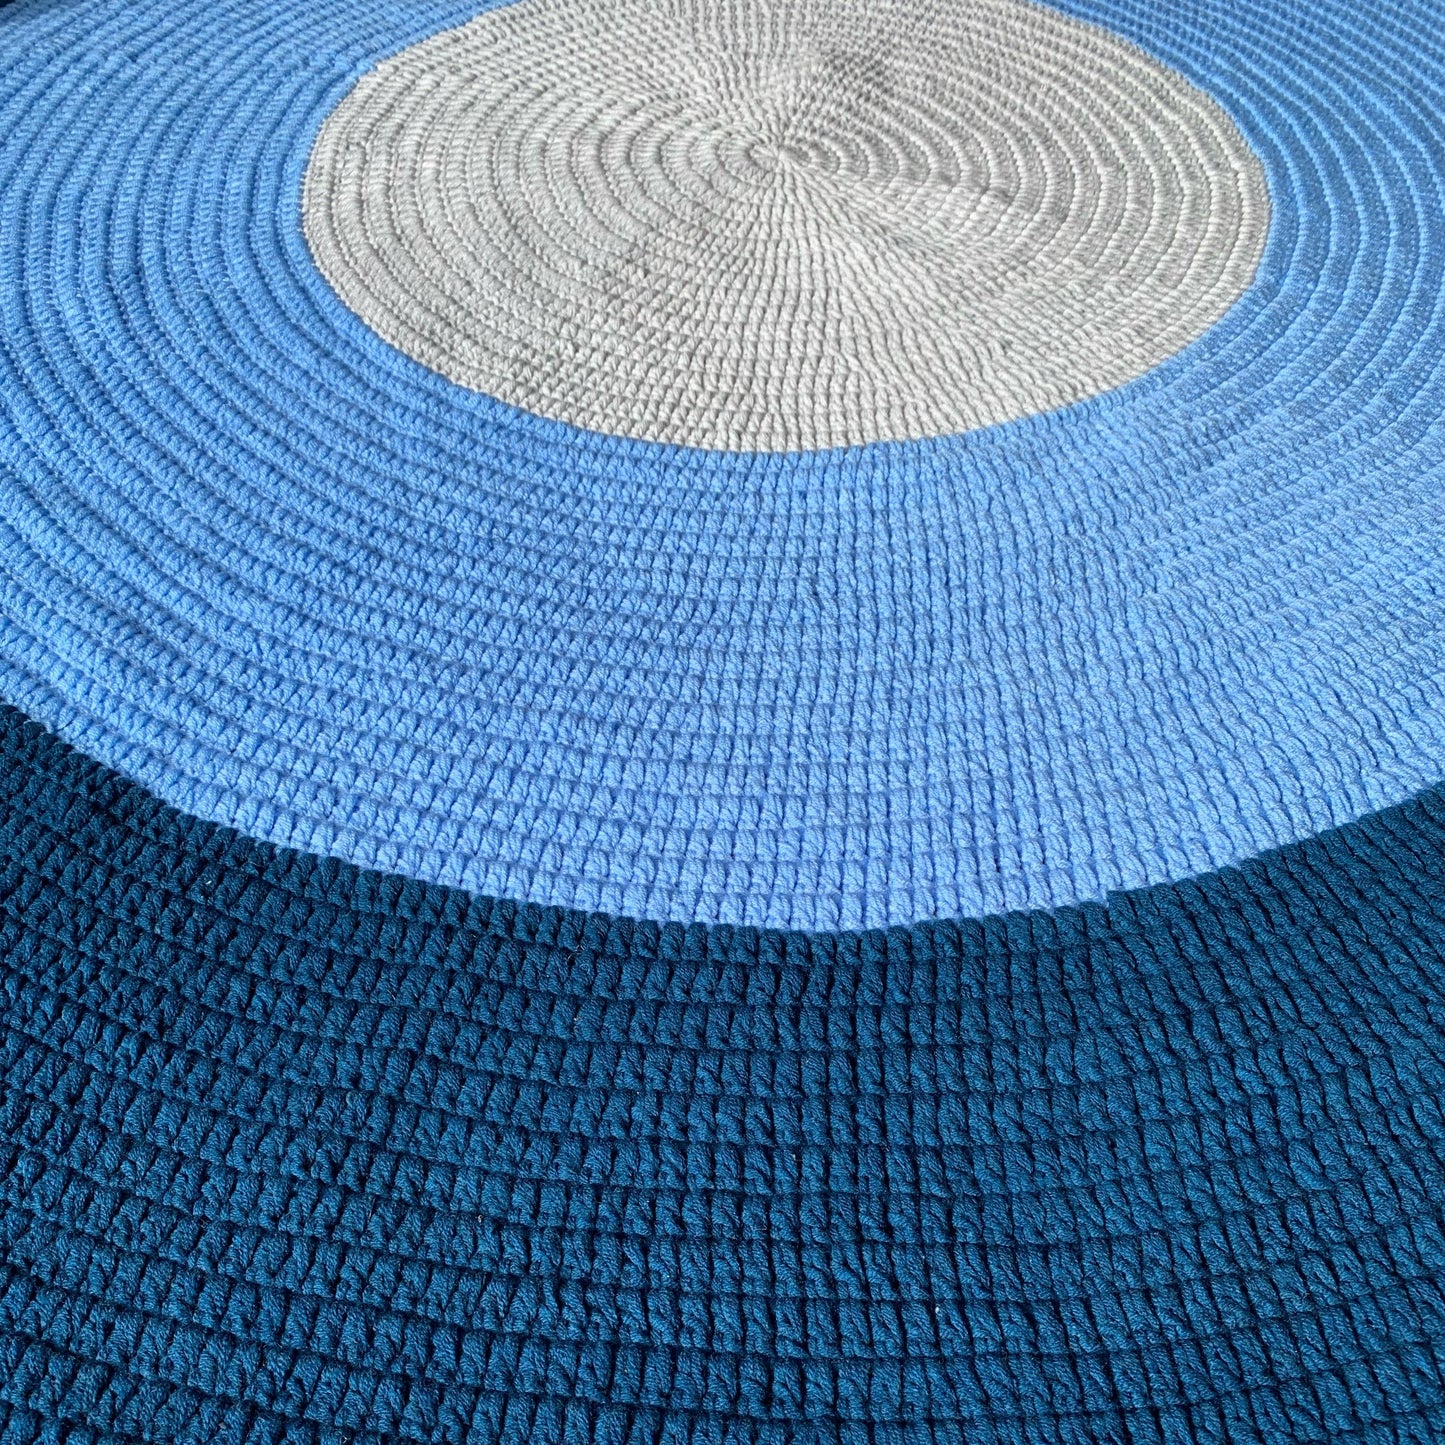 Nursery Round Crochet Rug - Navy Blue, Light Blue + Grey